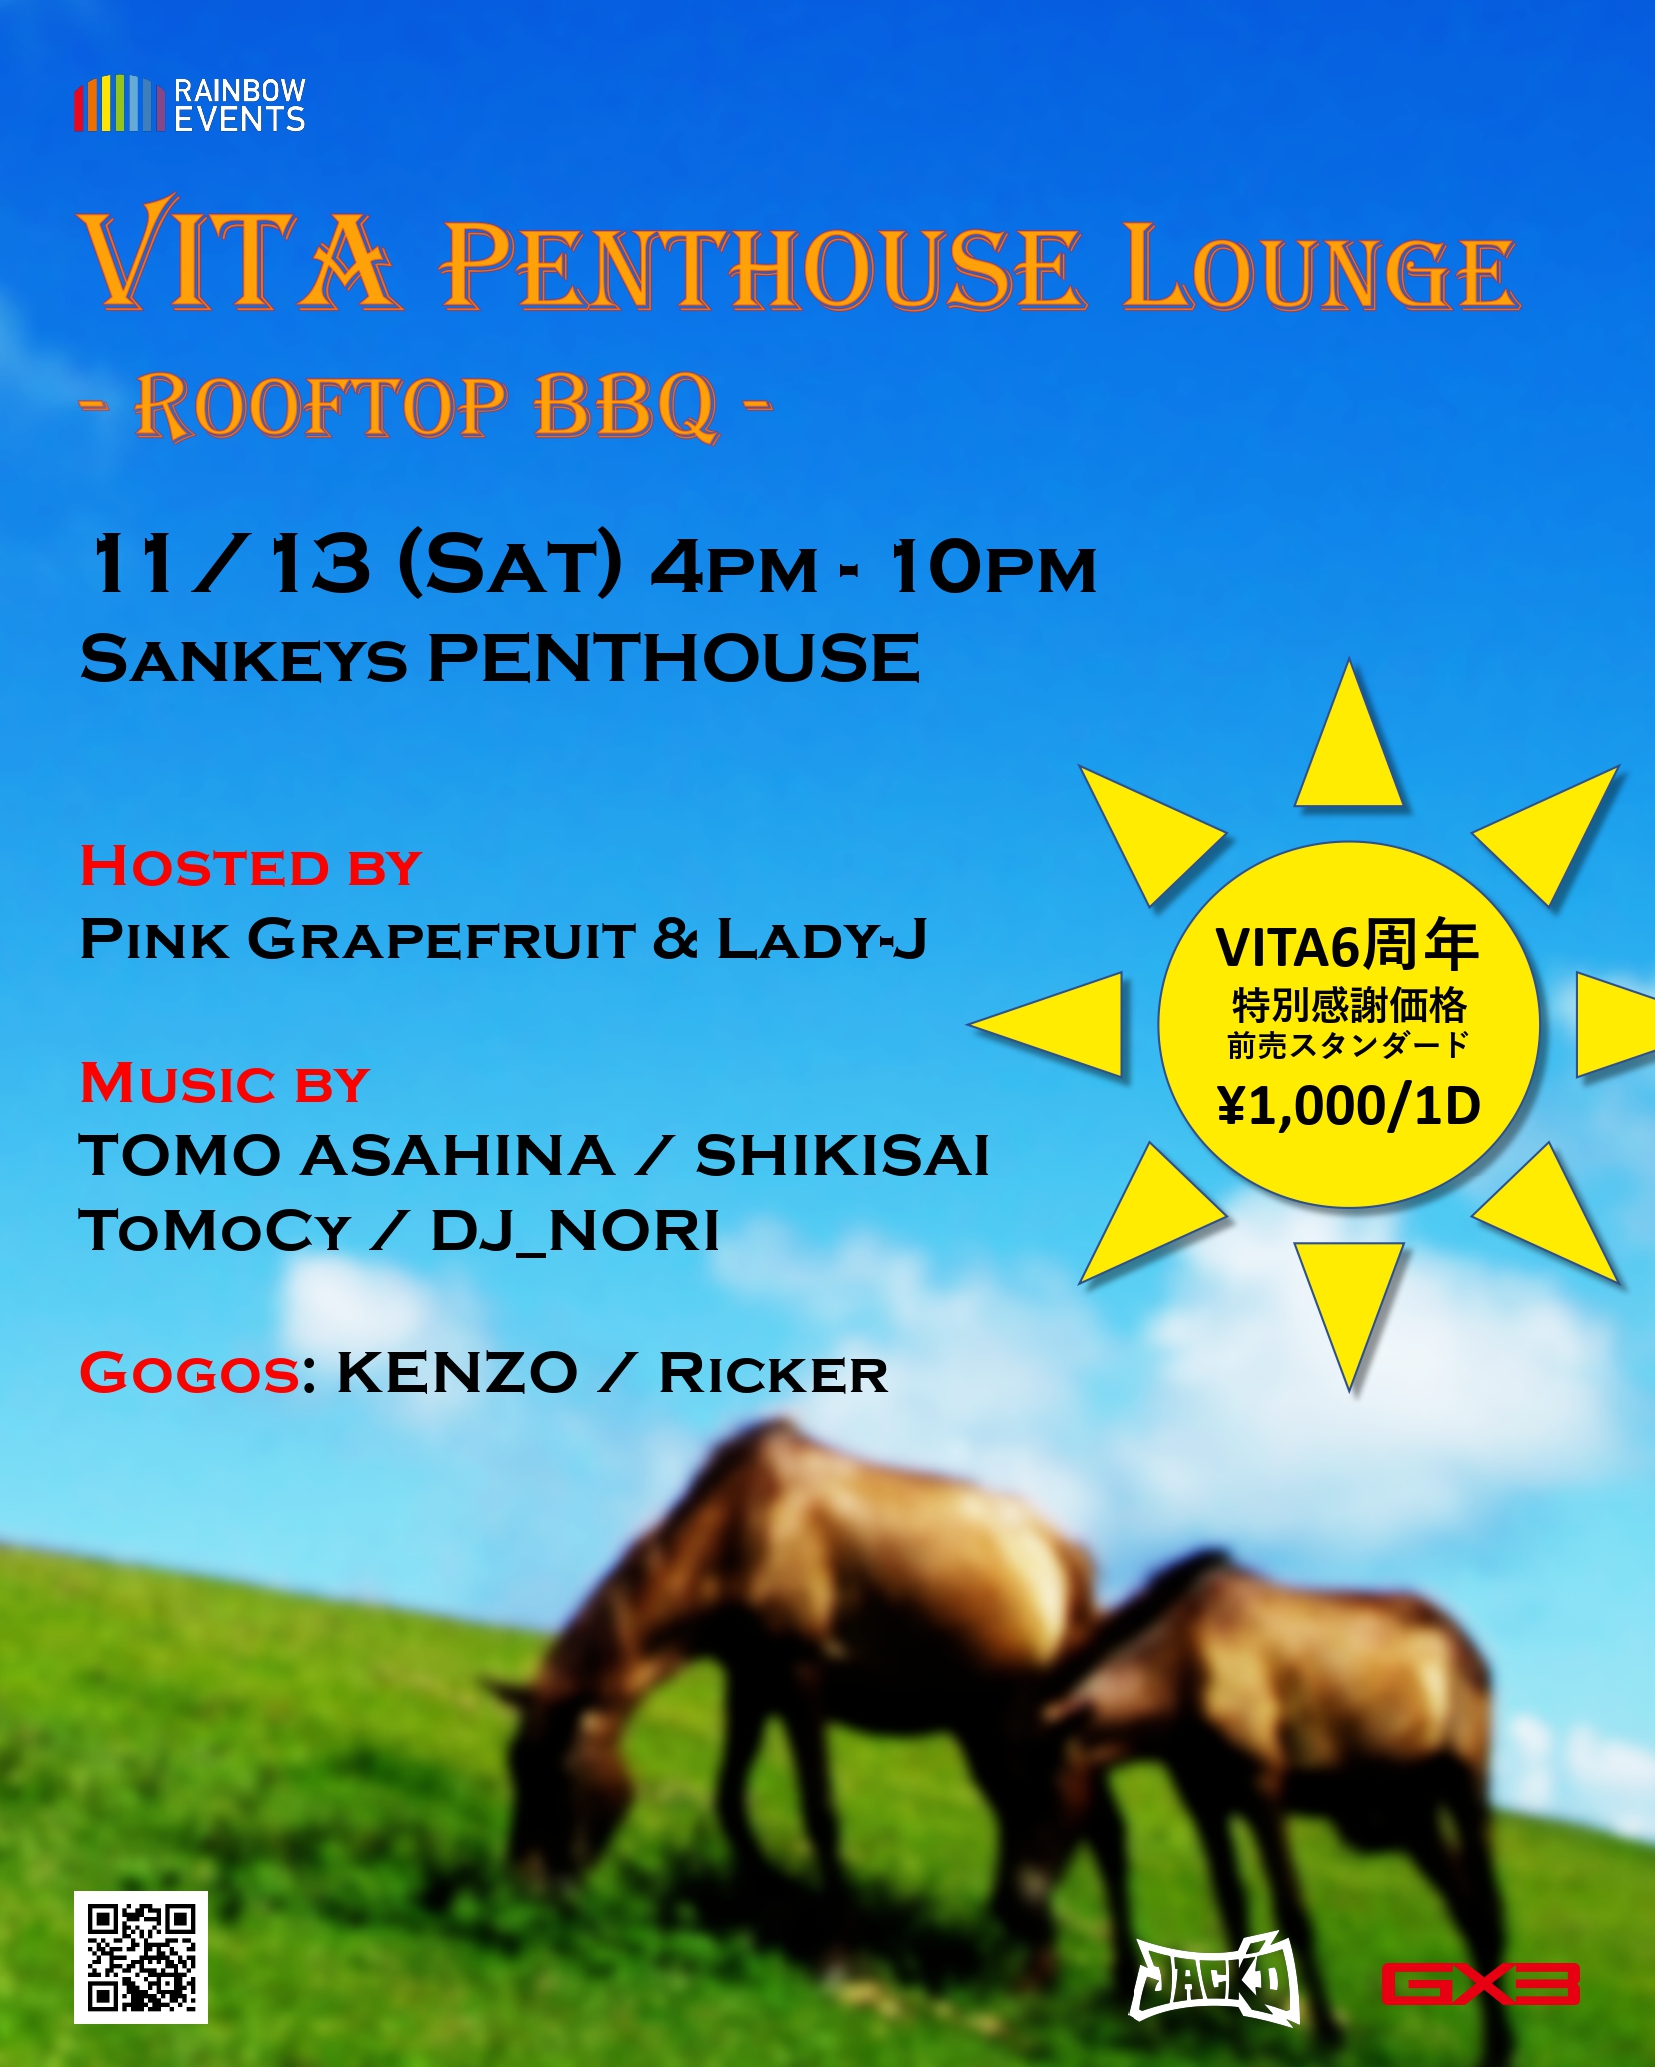 VITA Penthouse Lounge -Rooftop BBQ-